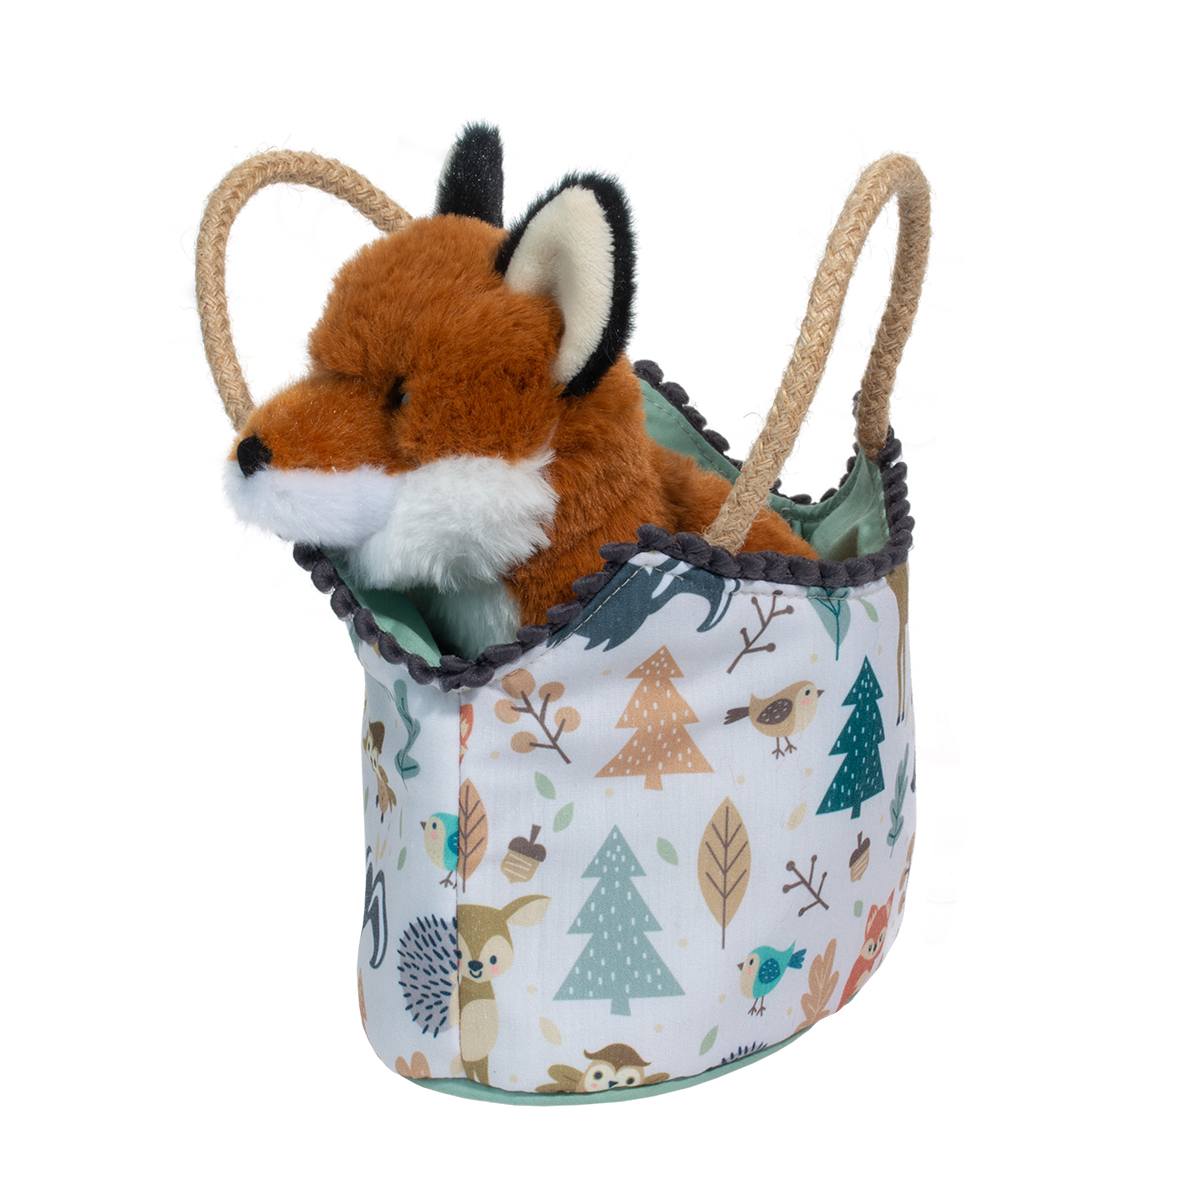 Sassy Pet Sak - Magical Forest Fox    